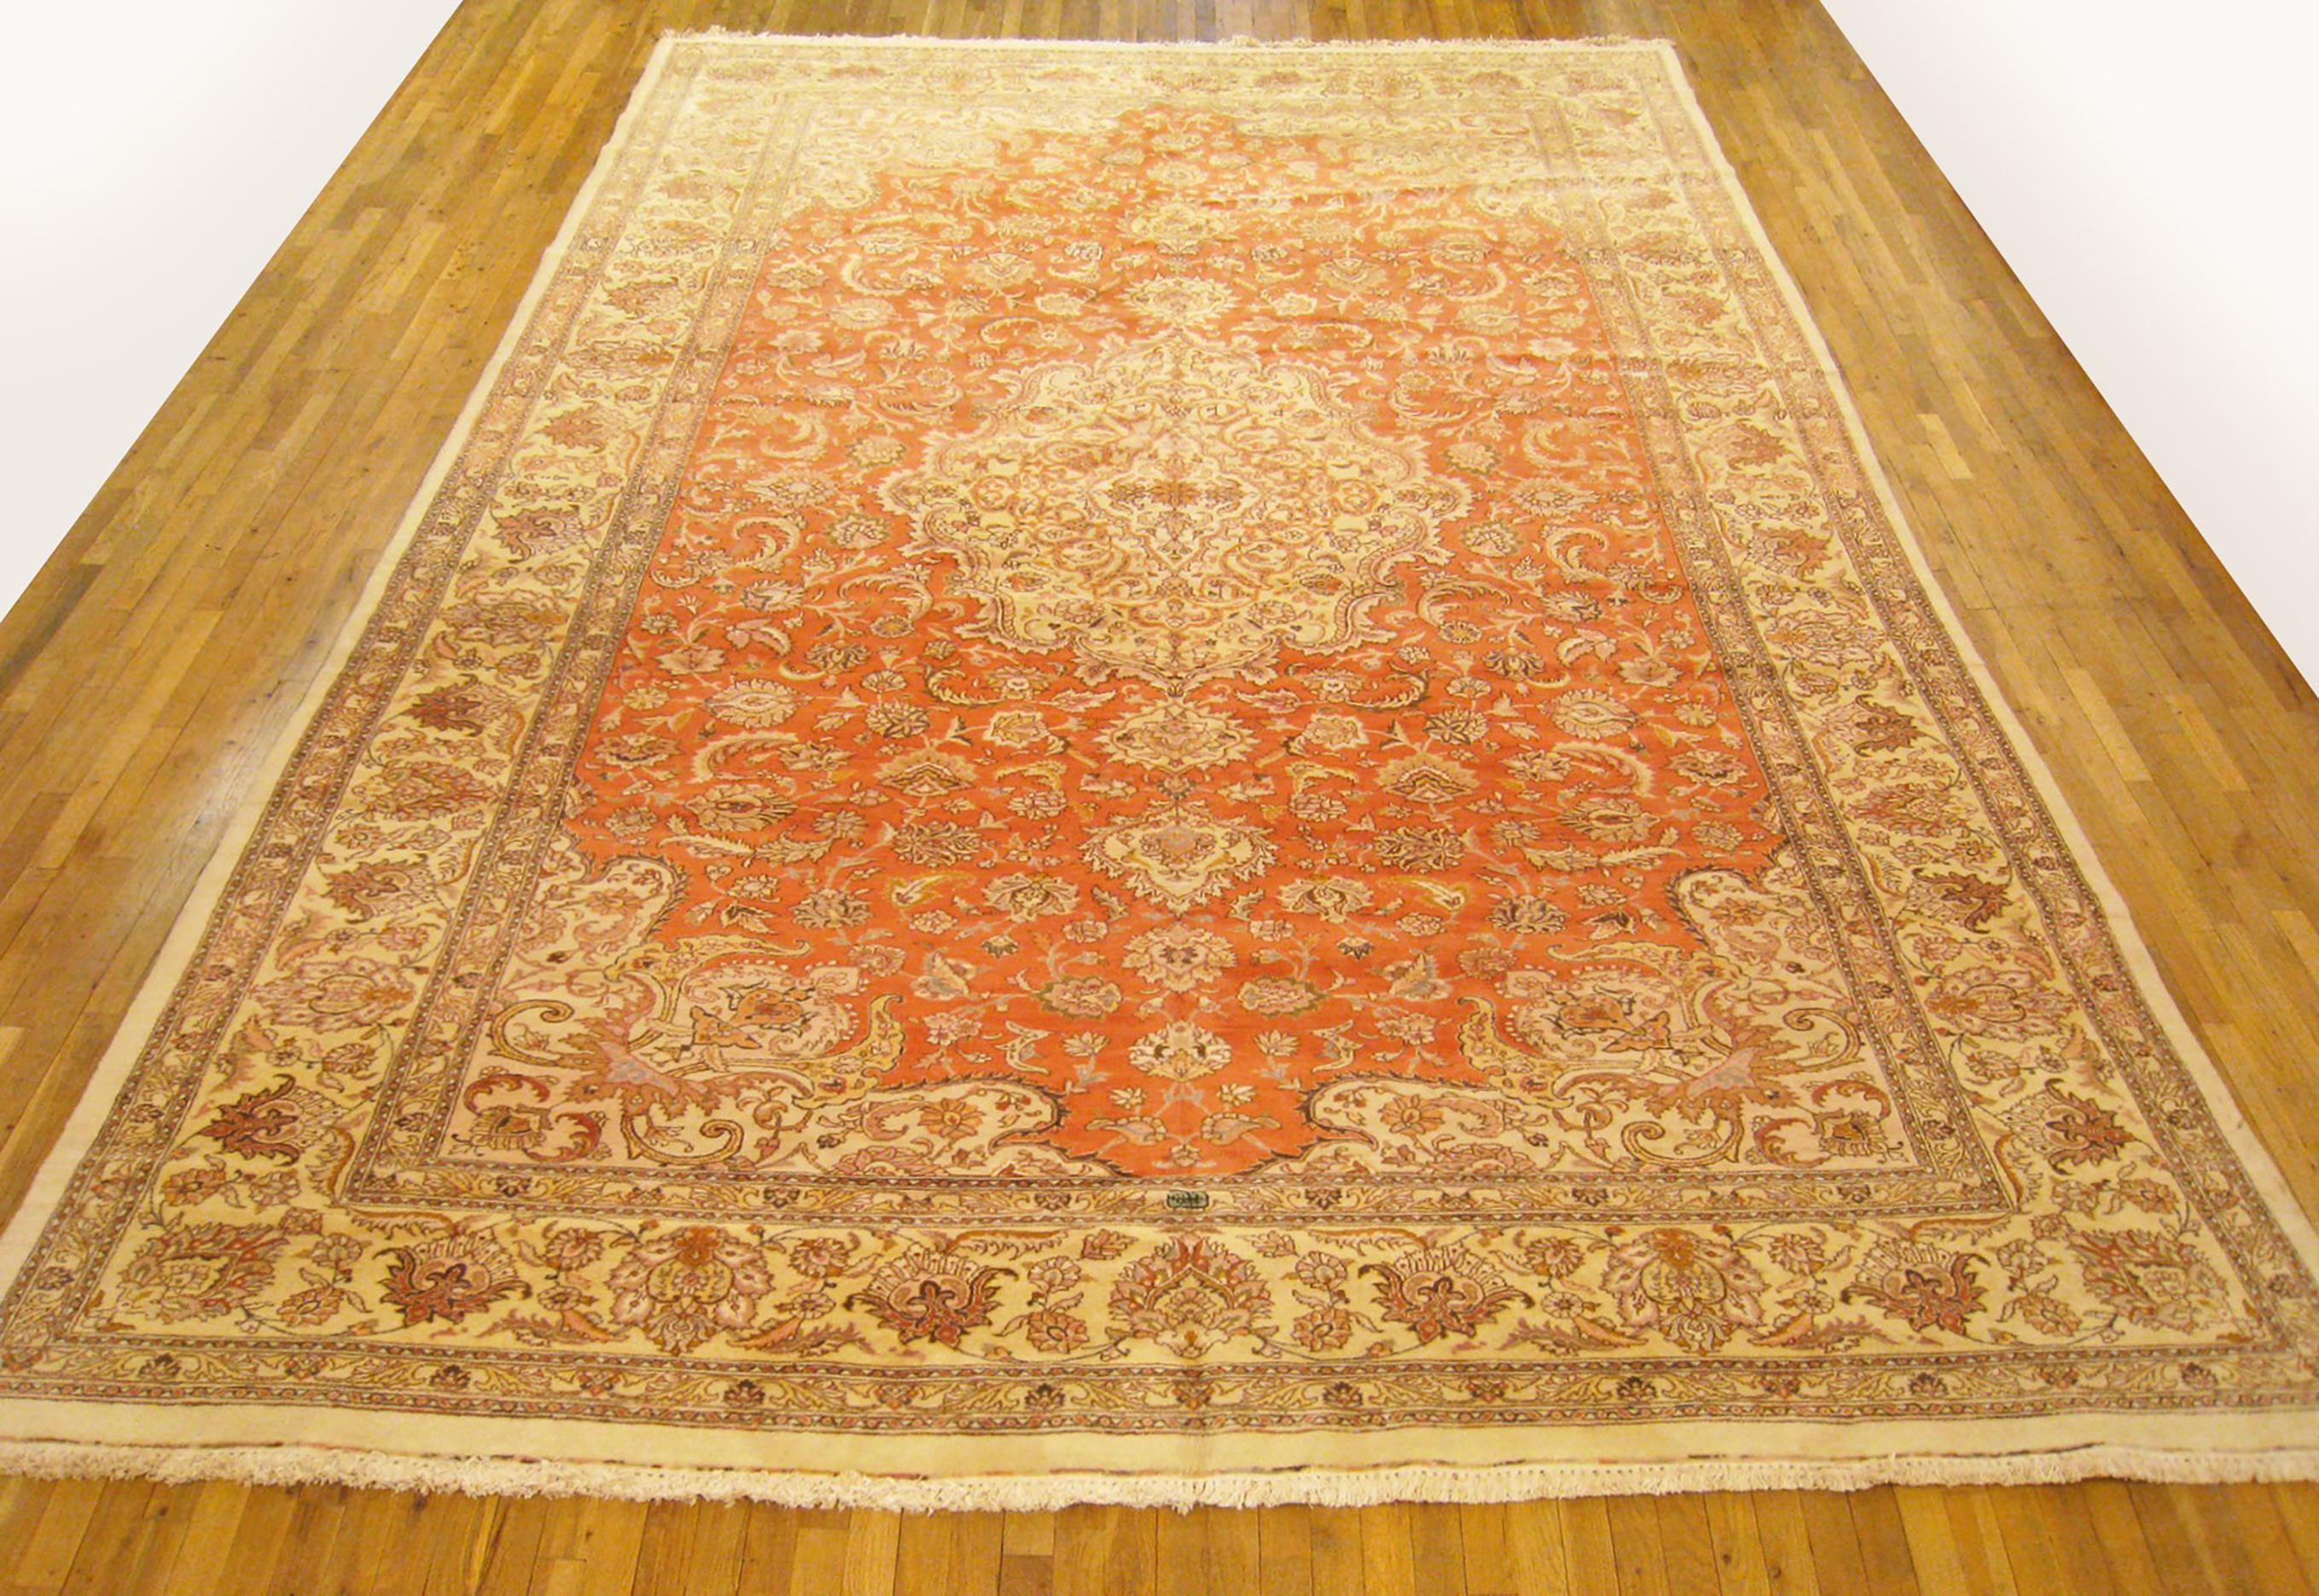 Vintage Persian Tabriz oriental carpet, circa 1950, large sized.

A vintage Persian Tabriz oriental carpet, circa 1950. Size: 16'2